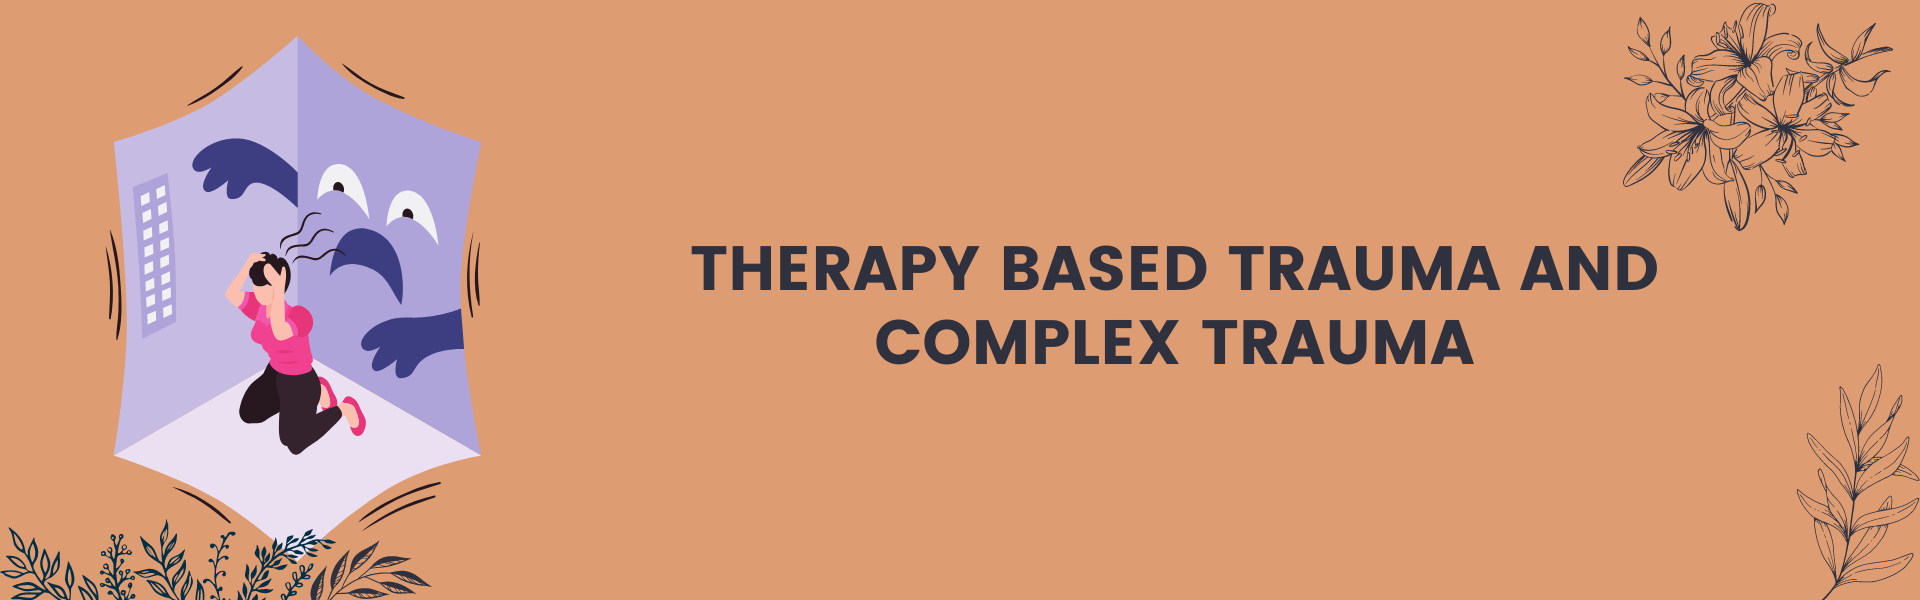 terapy based trauma Banner